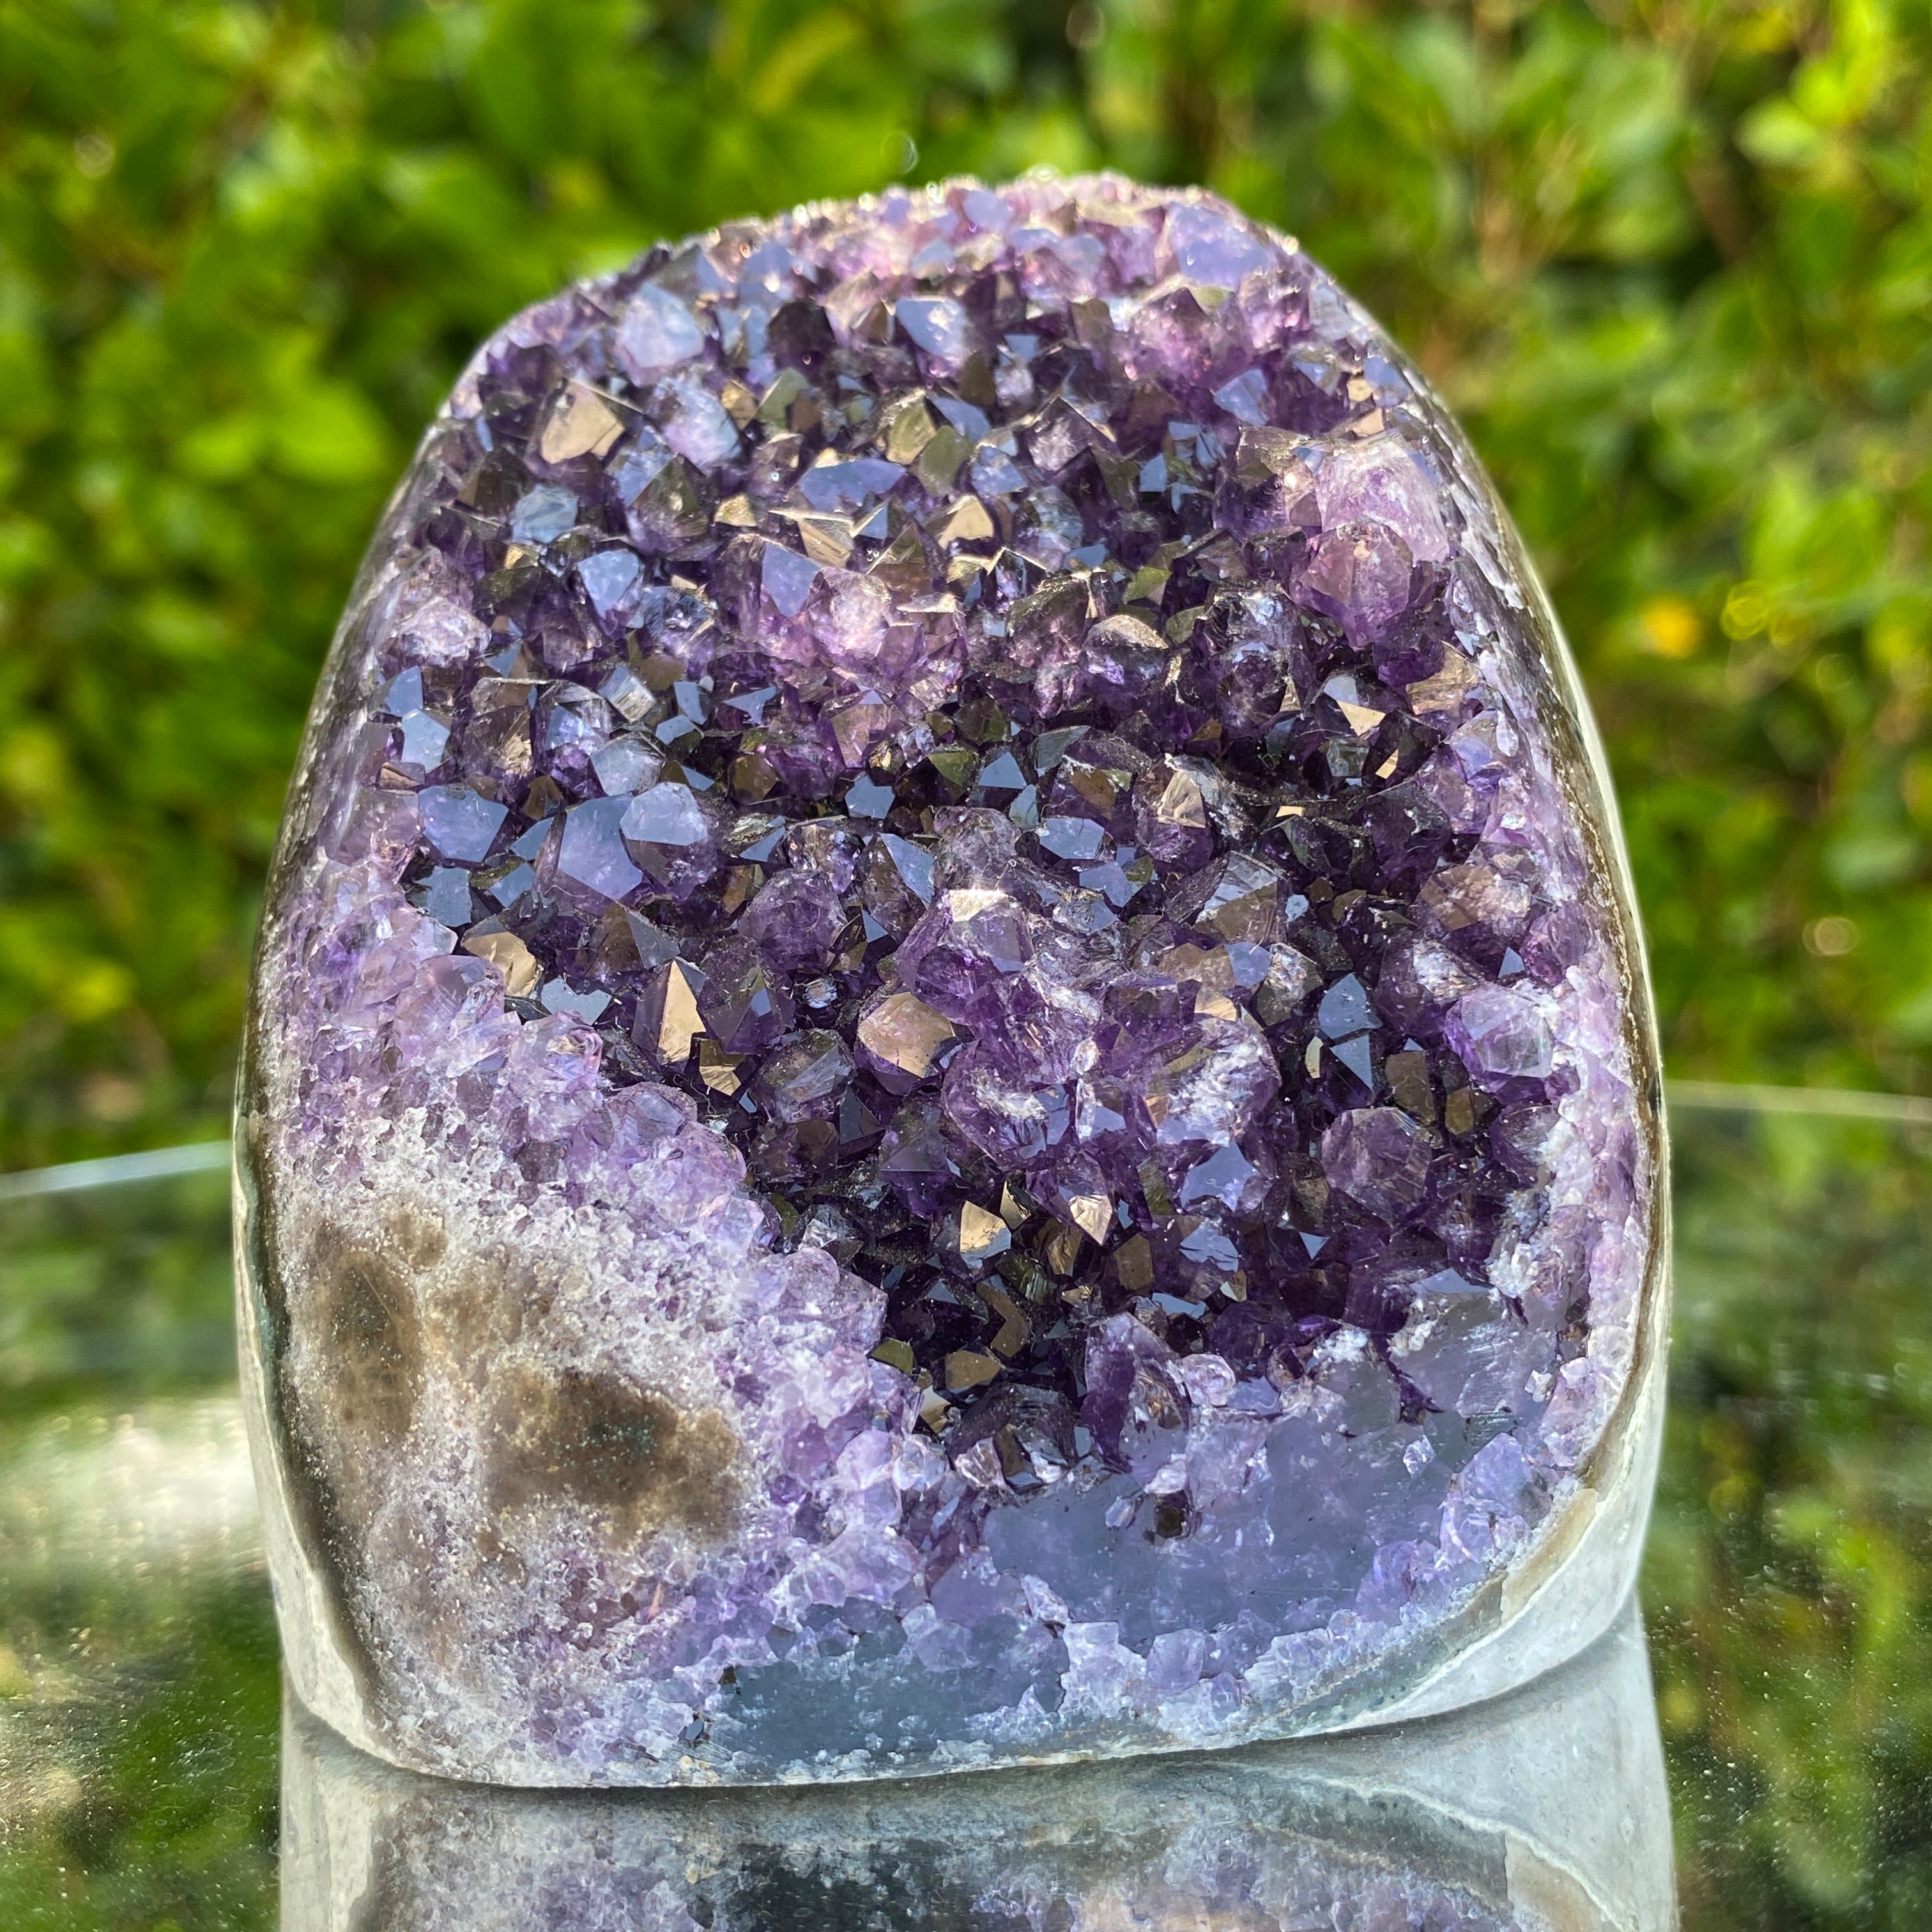 694g 9x9x7cm Grade A+ Big Smooth Crystal Purple Amethyst Geode from Uruguay